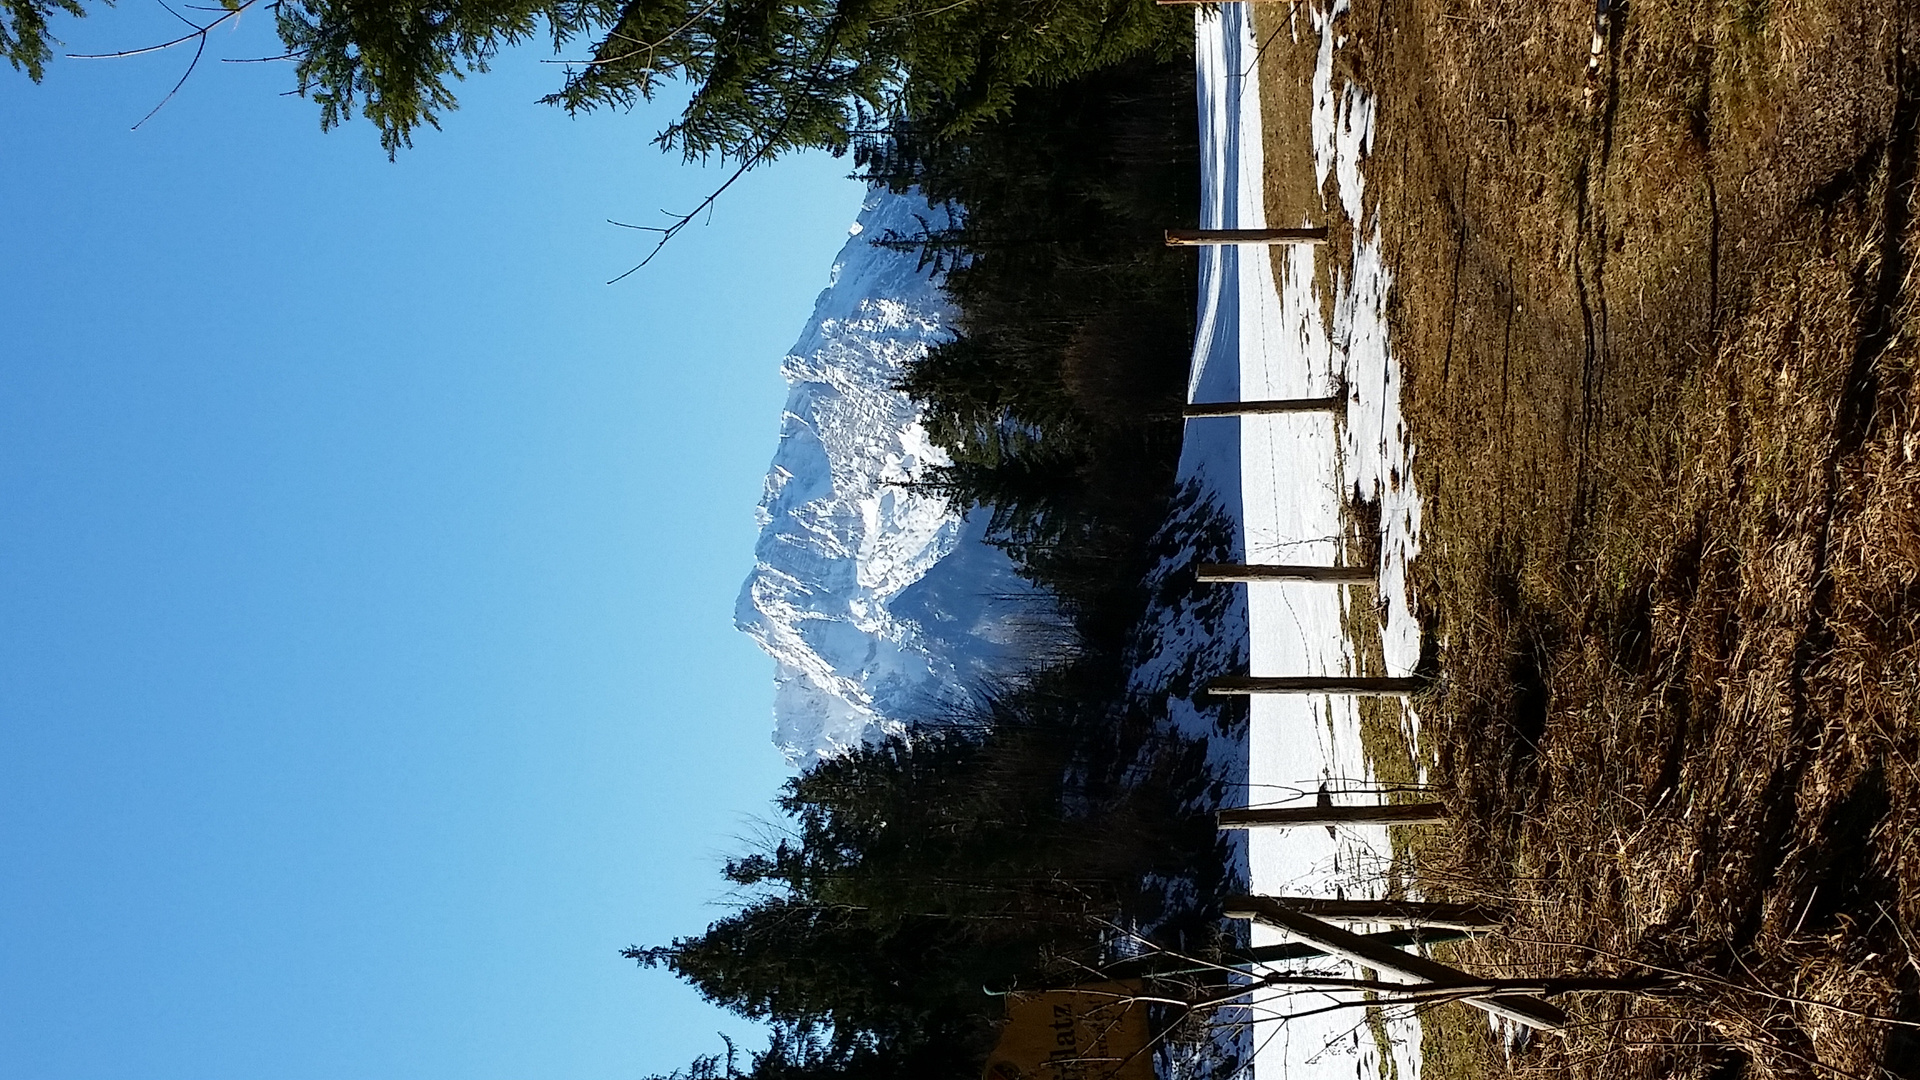 Berchtesgadener Alpen